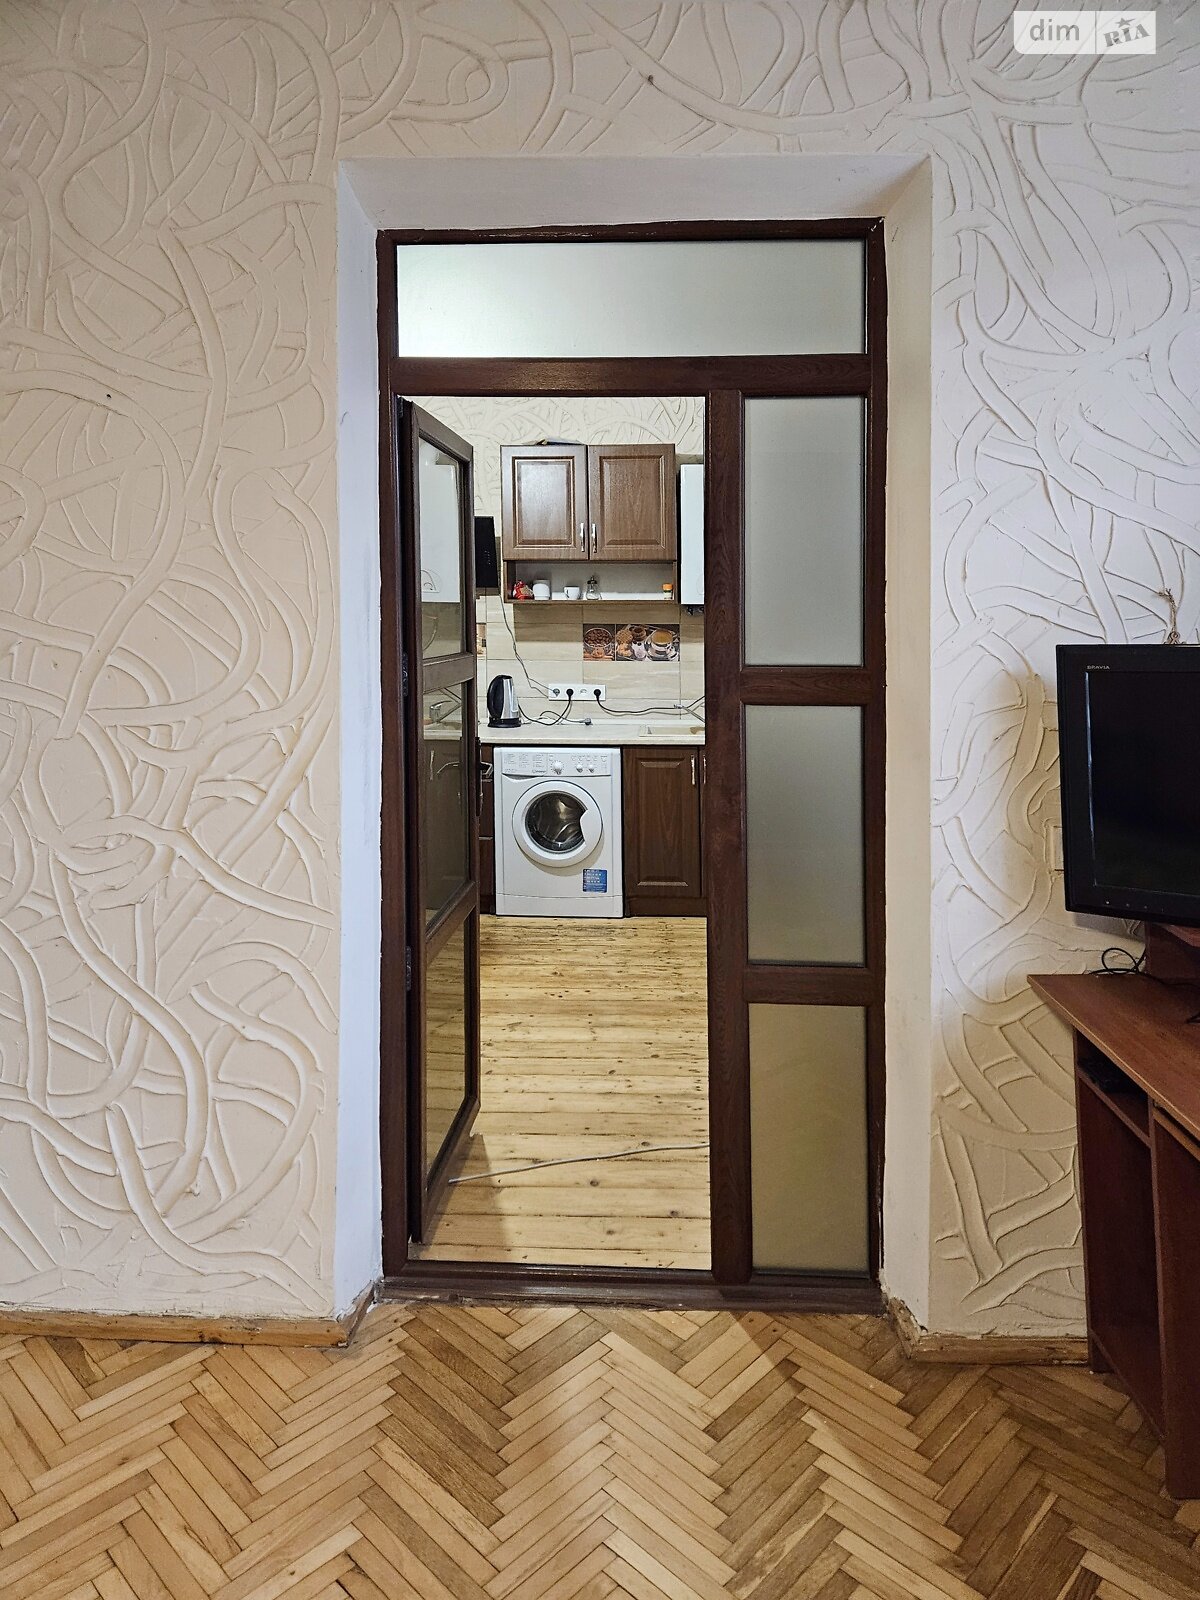 Продажа однокомнатной квартиры в Львове, на ул. Дудаева Джохара, район Центр фото 1